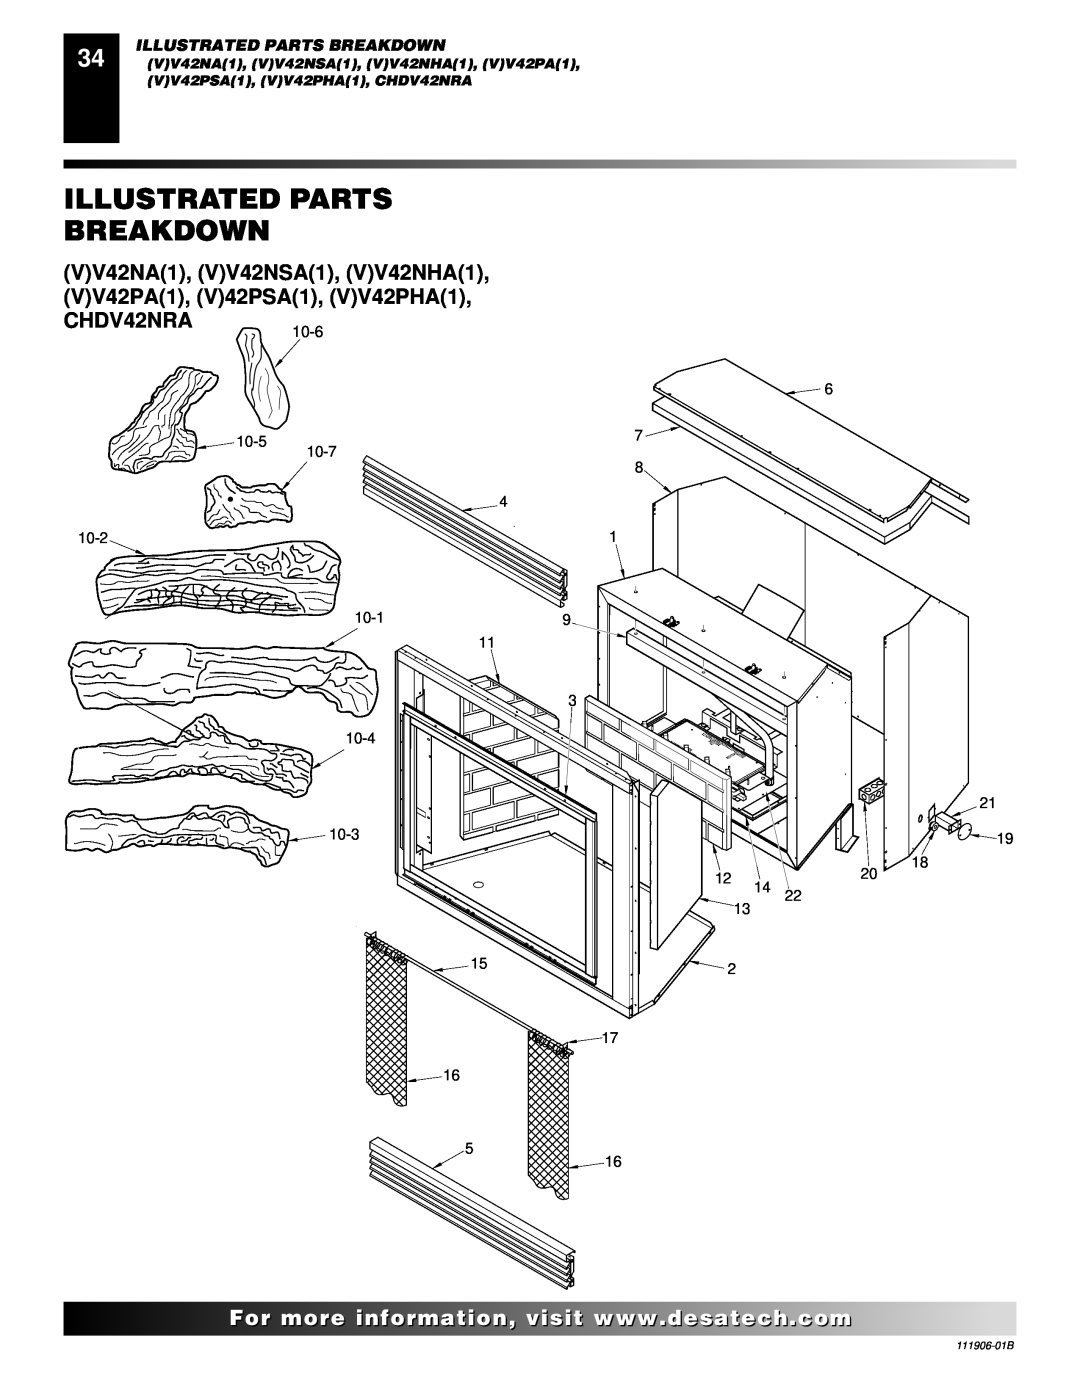 Desa (V)V42PA(1) installation manual Illustrated Parts Breakdown, CHDV42NRA 